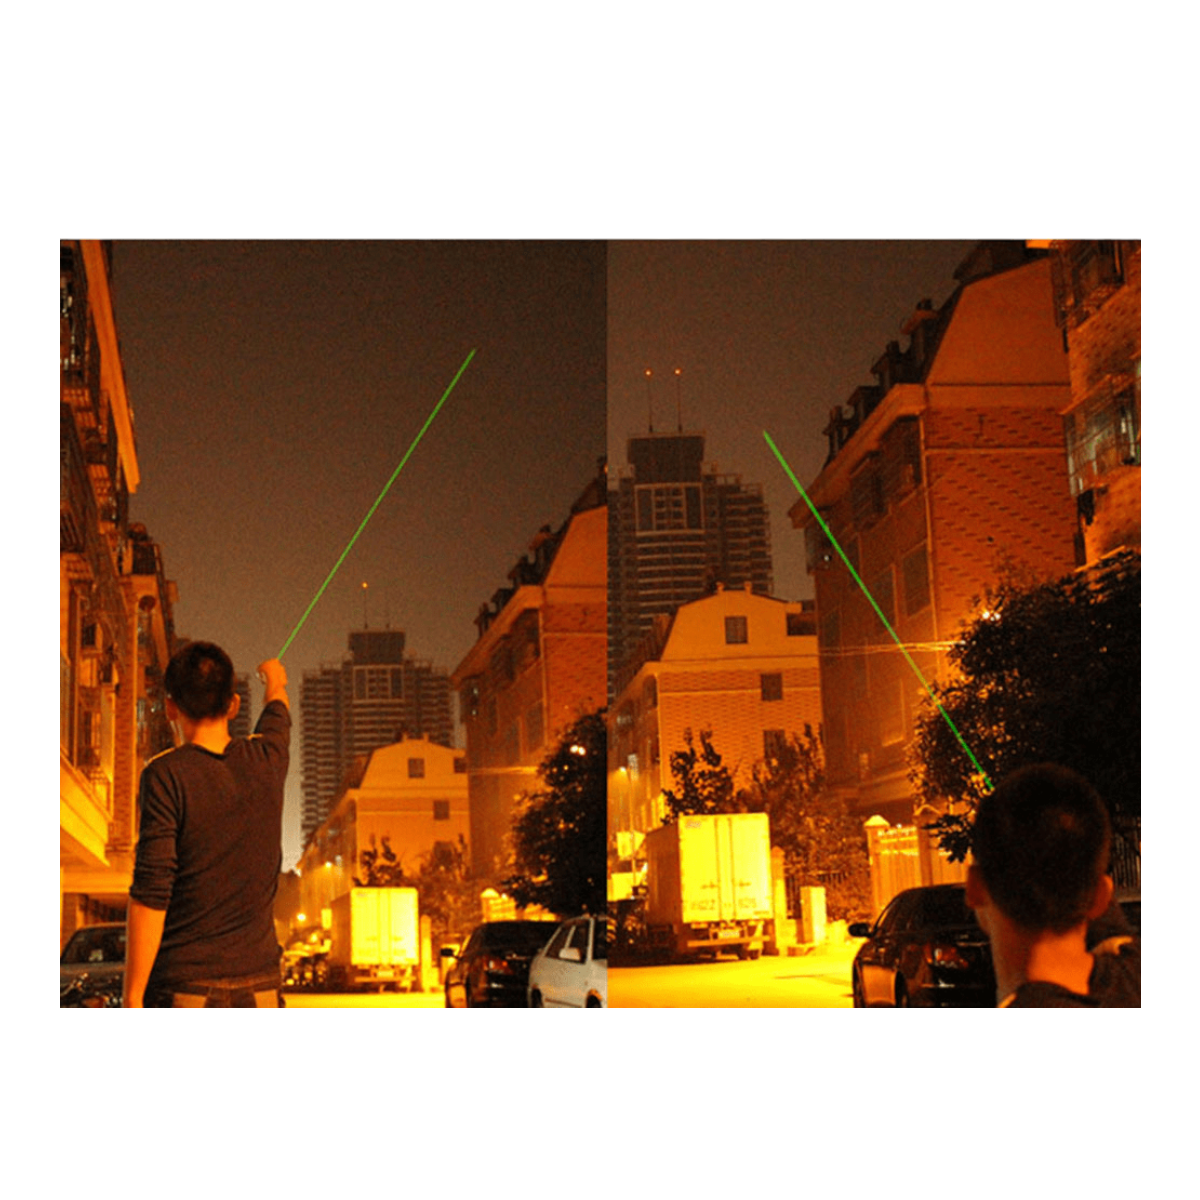 Puntero Laser Verde/rojo Yl-303 radiacion larga distancia MLT20